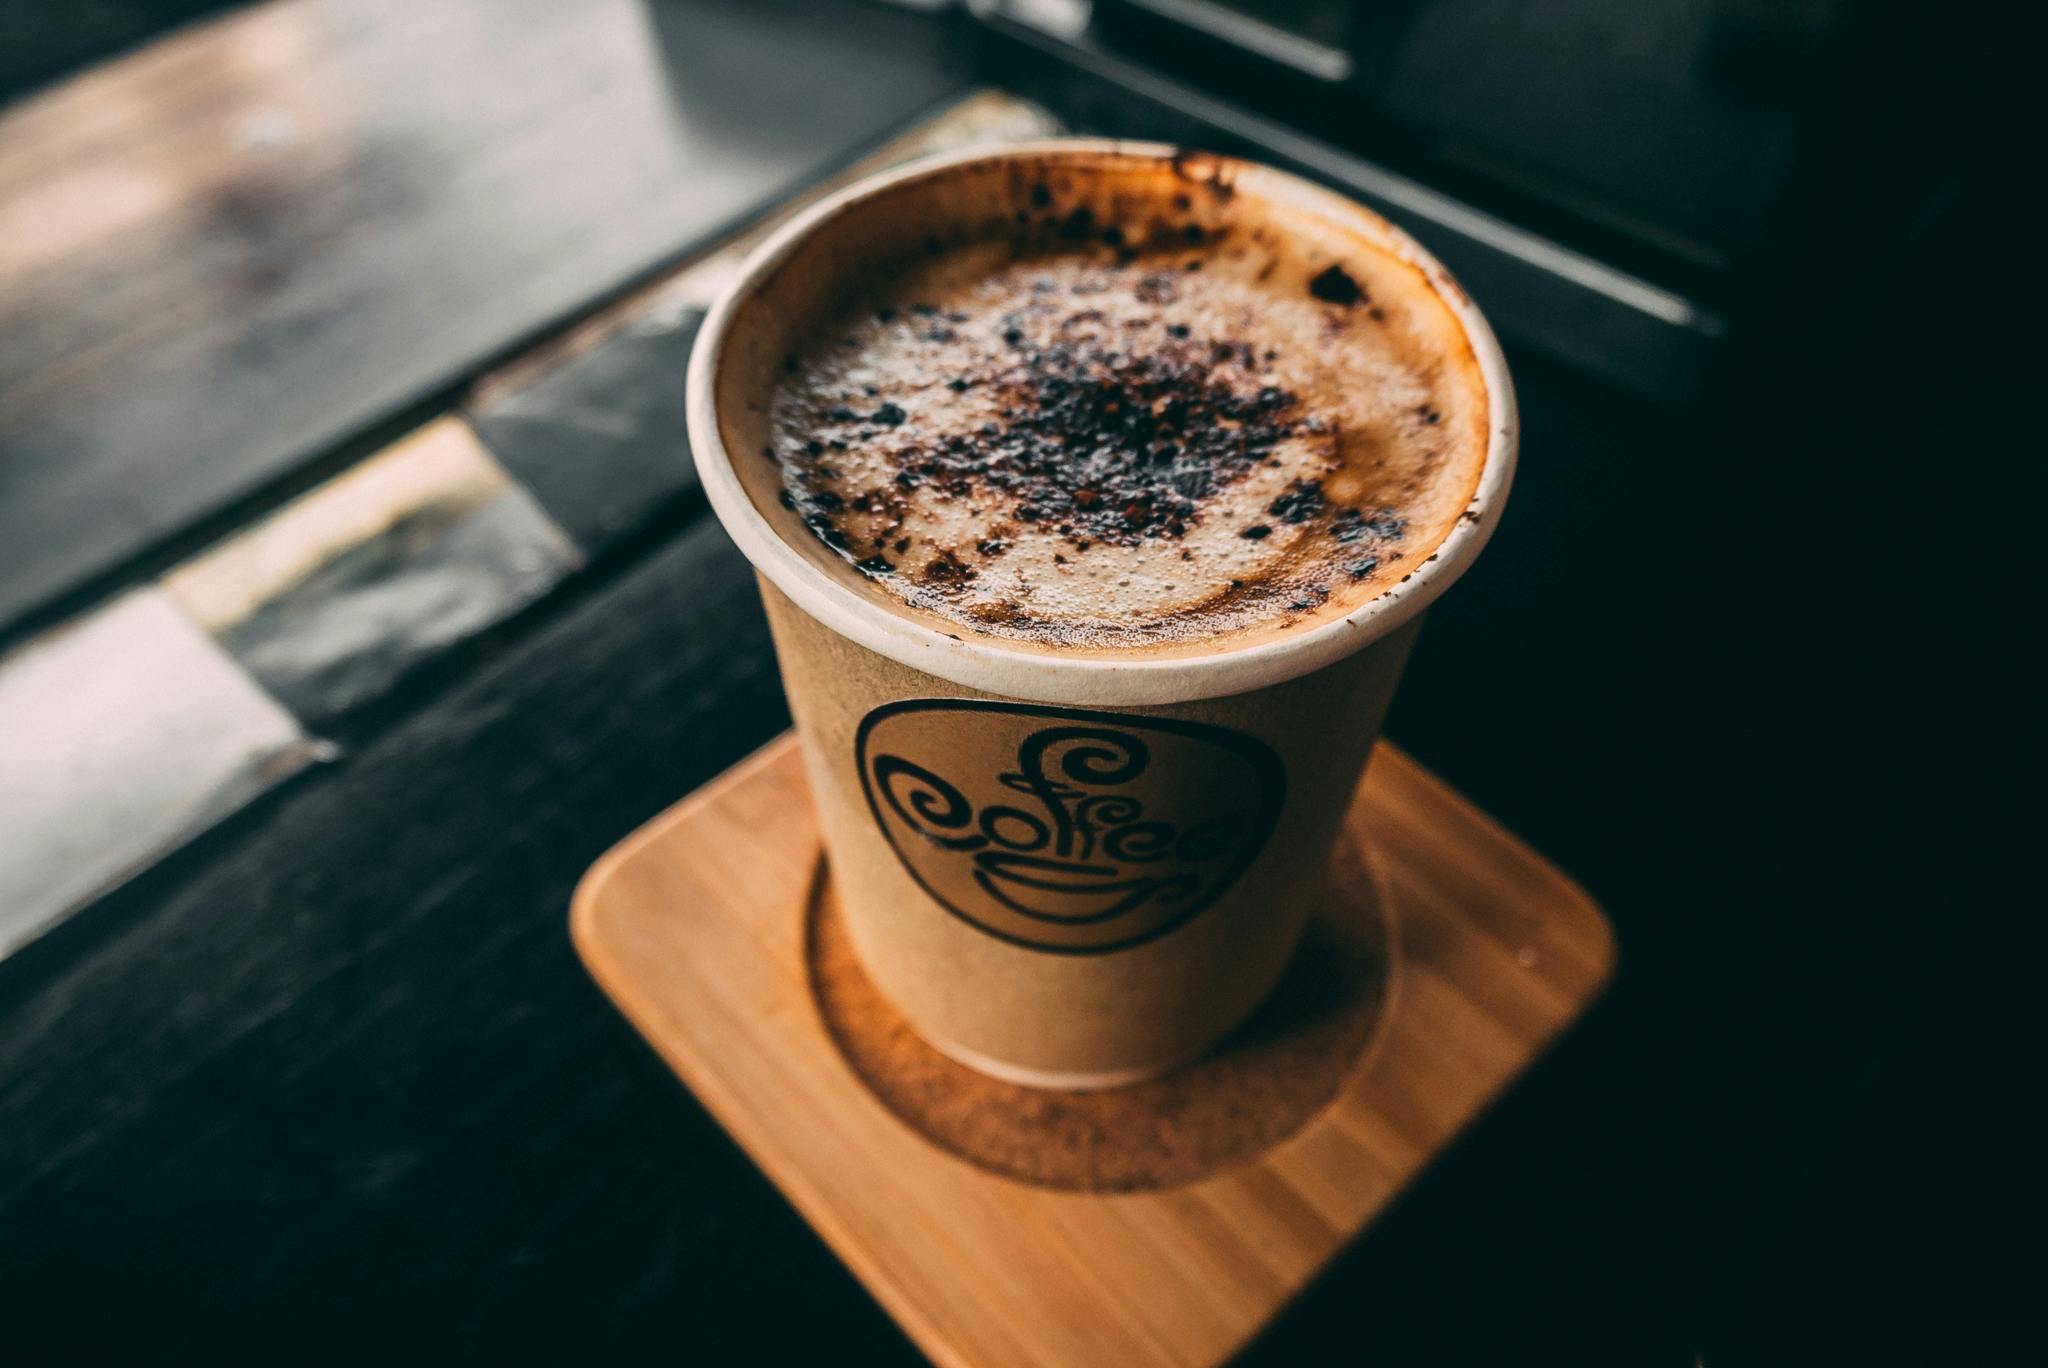 1000+ Beautiful Coffee Cup Photos · Pexels · Free Stock Photos